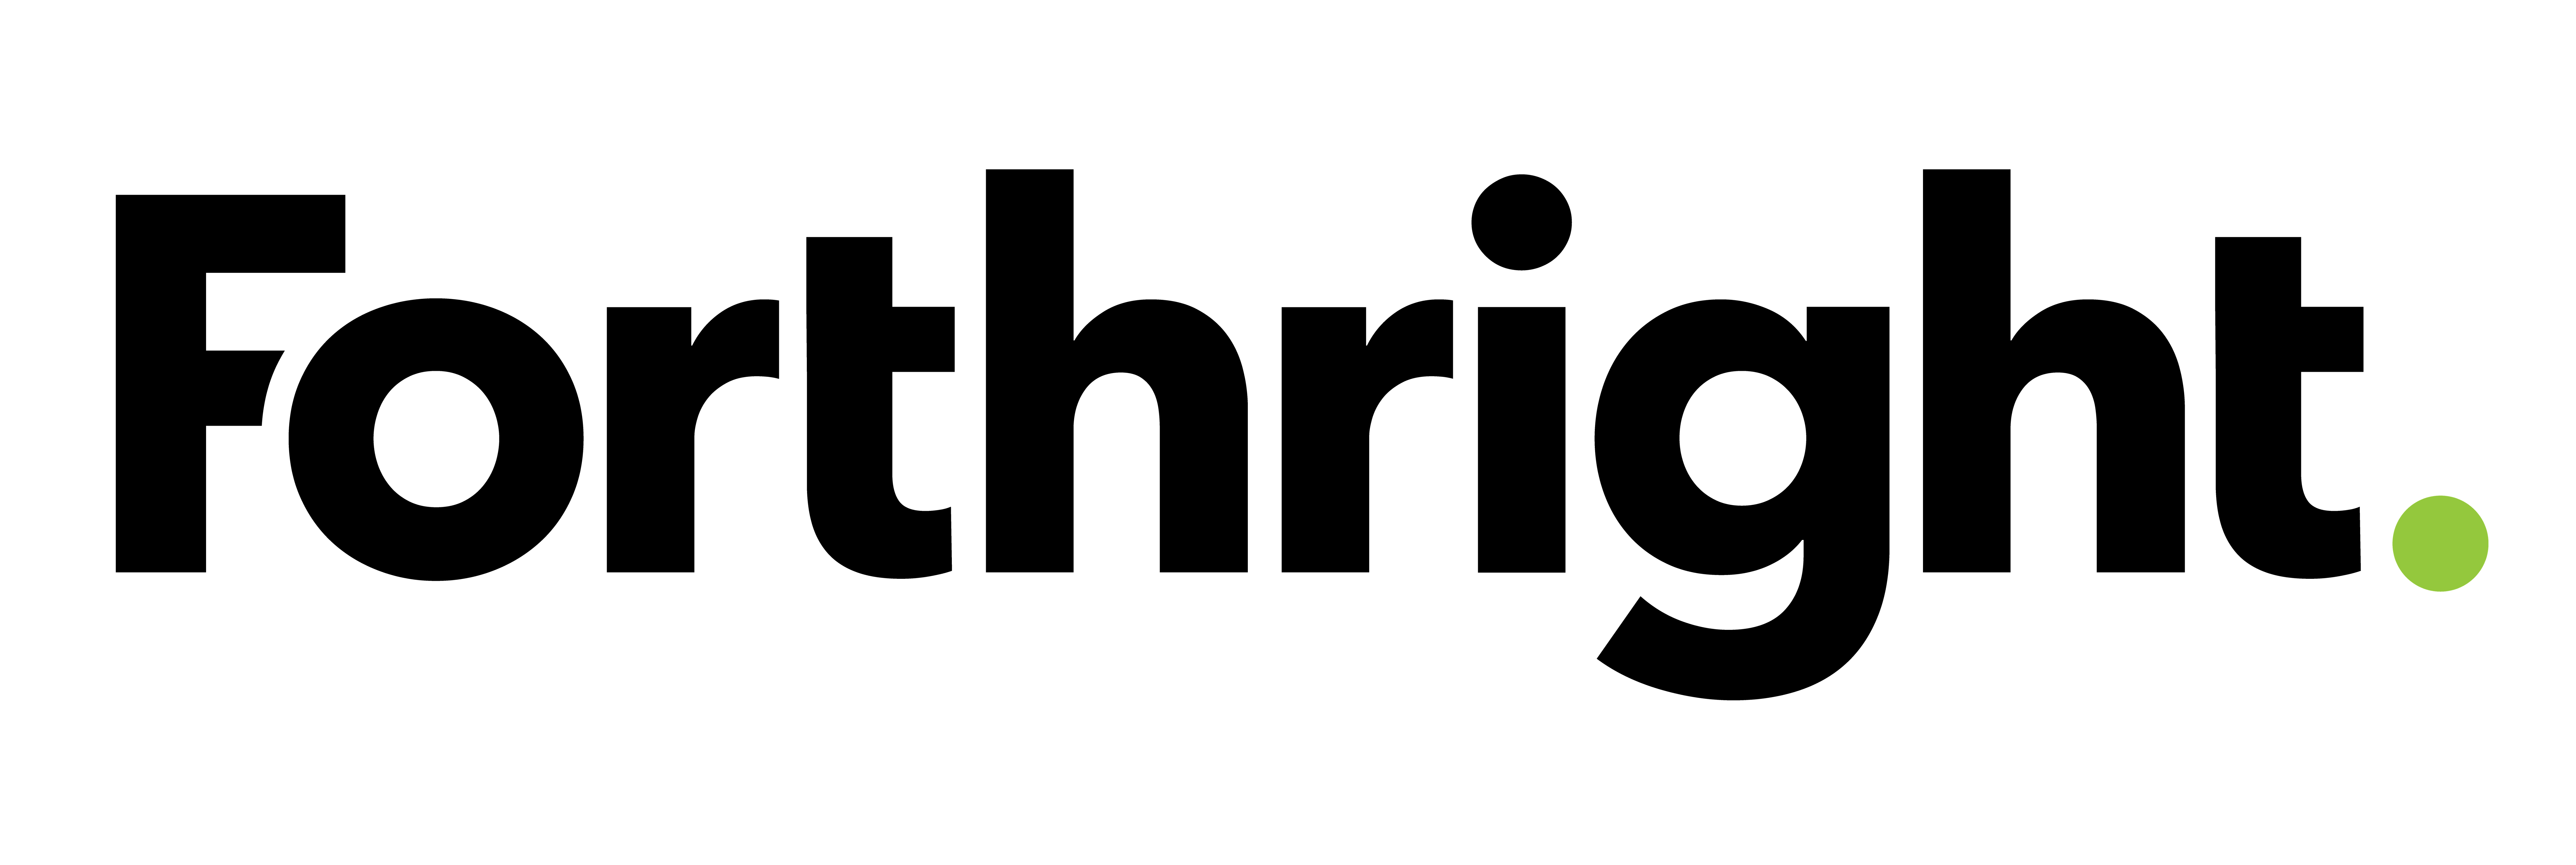 Forthright Logo1-01-1